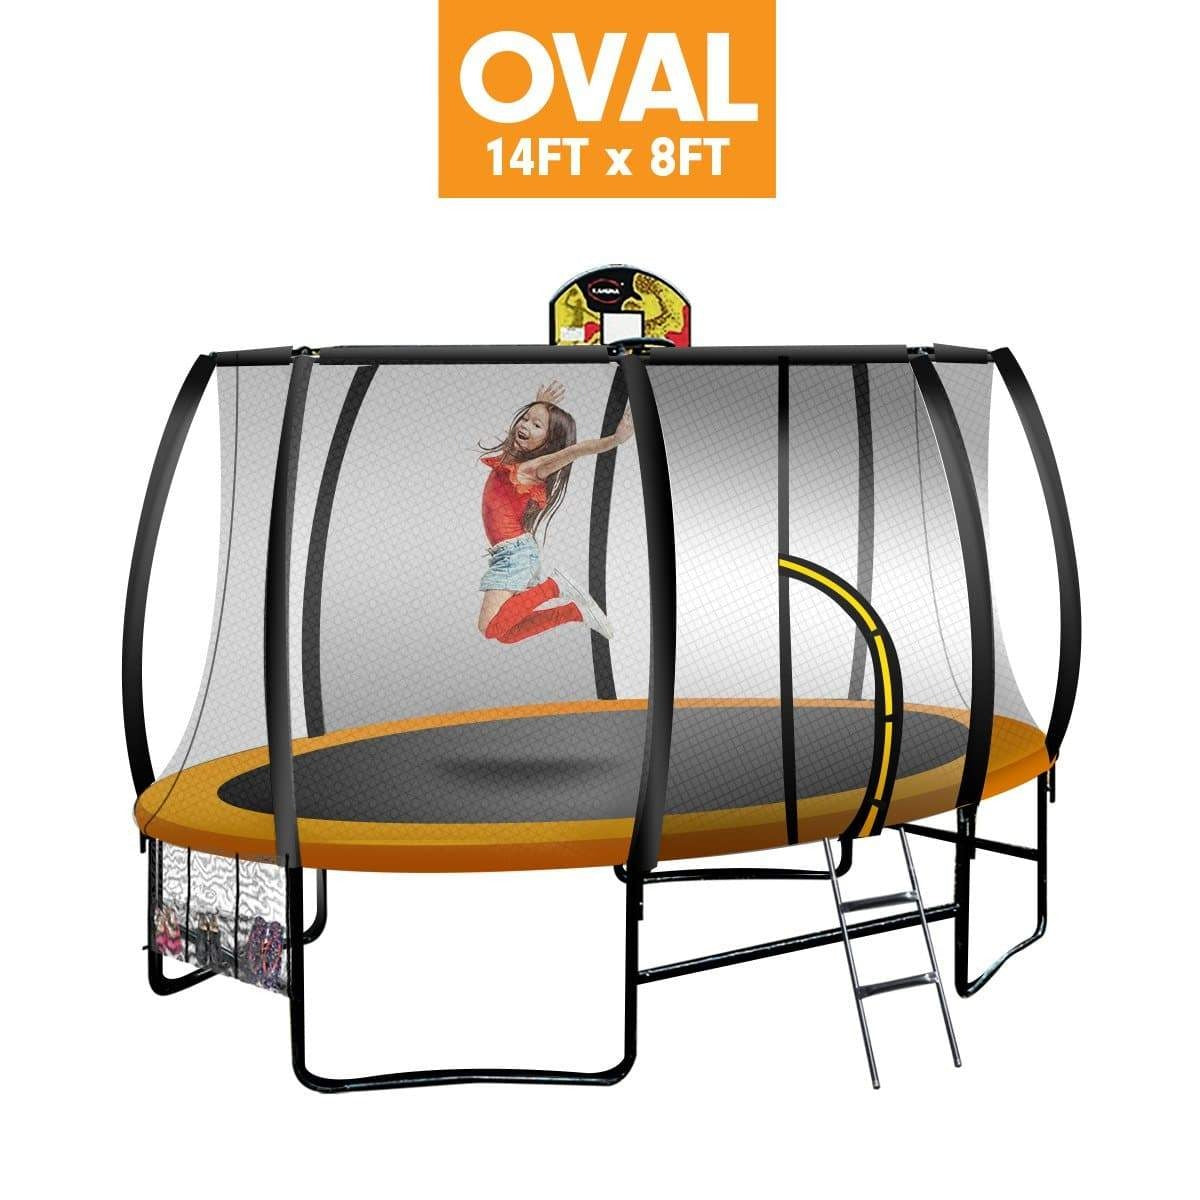 Trampoline 8 ft x 14ft Oval with Basketball Set - Orange